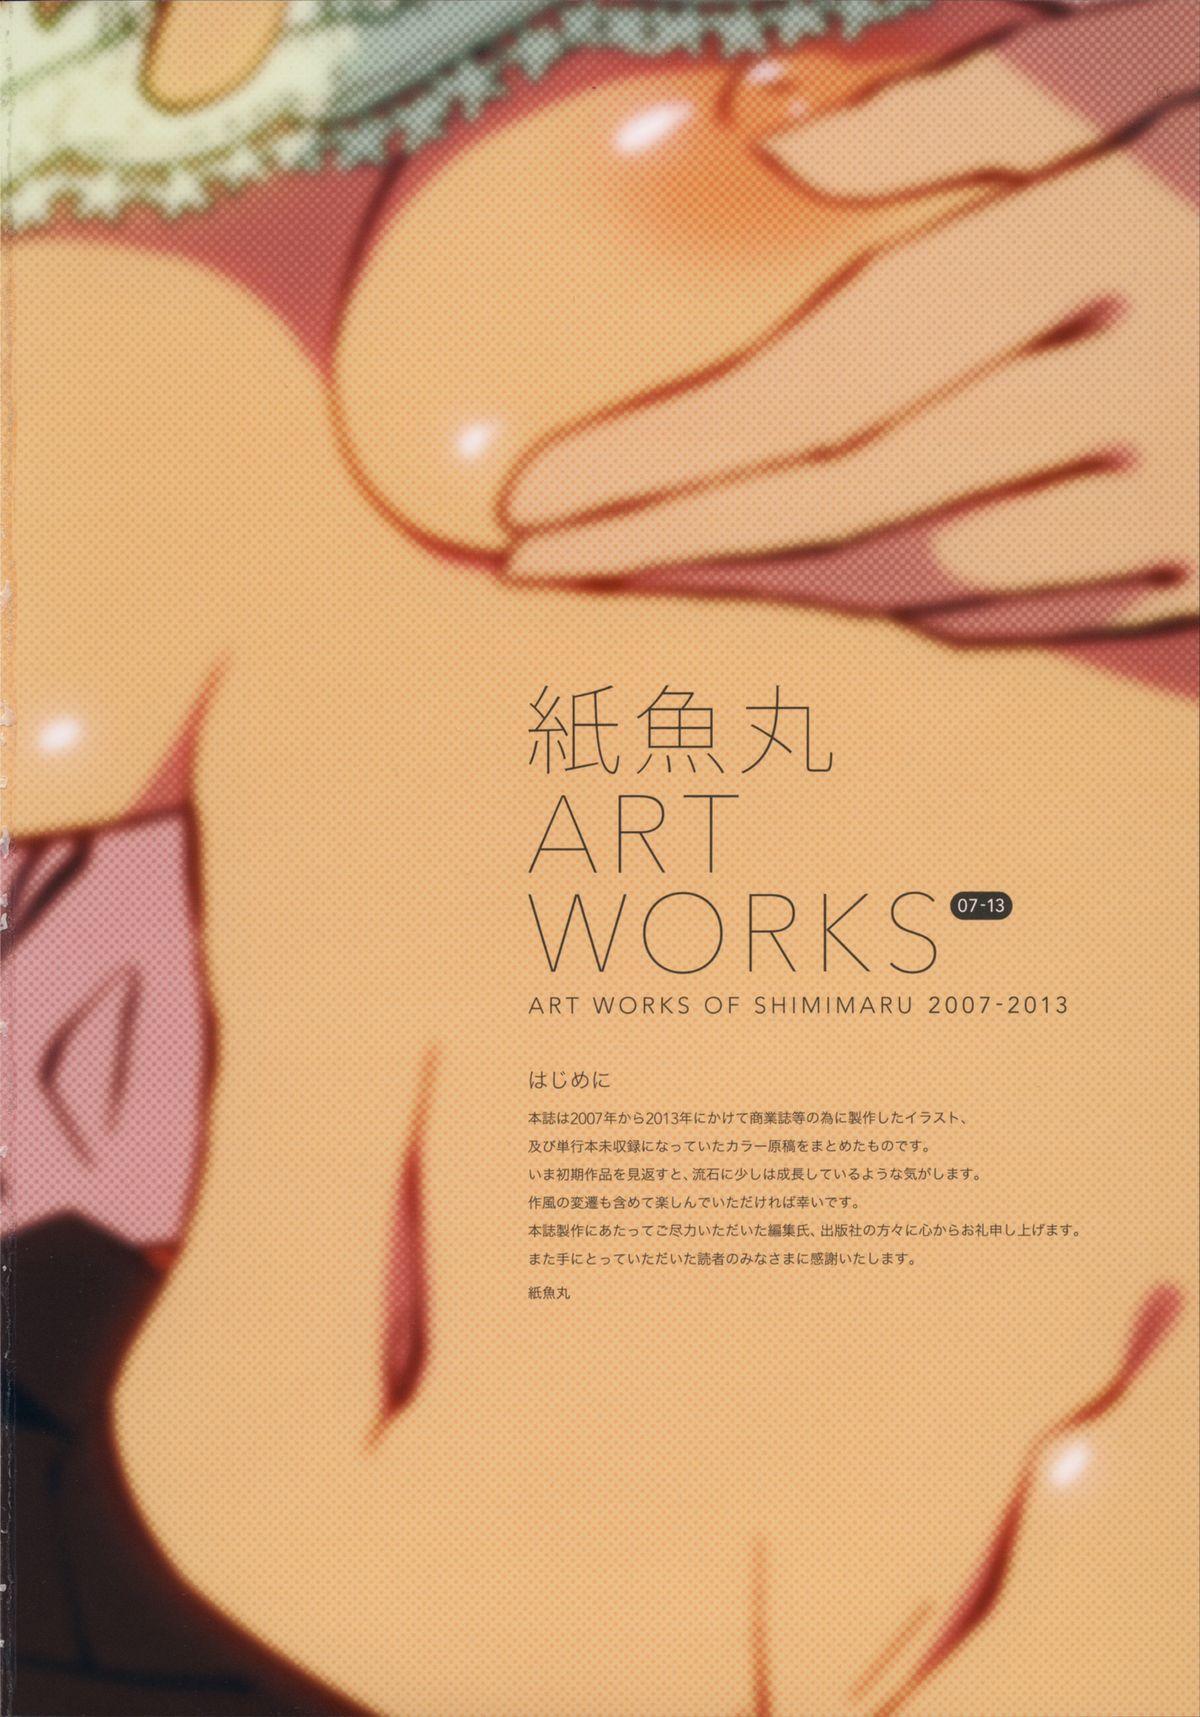 Shimimaru ART WORKS 1